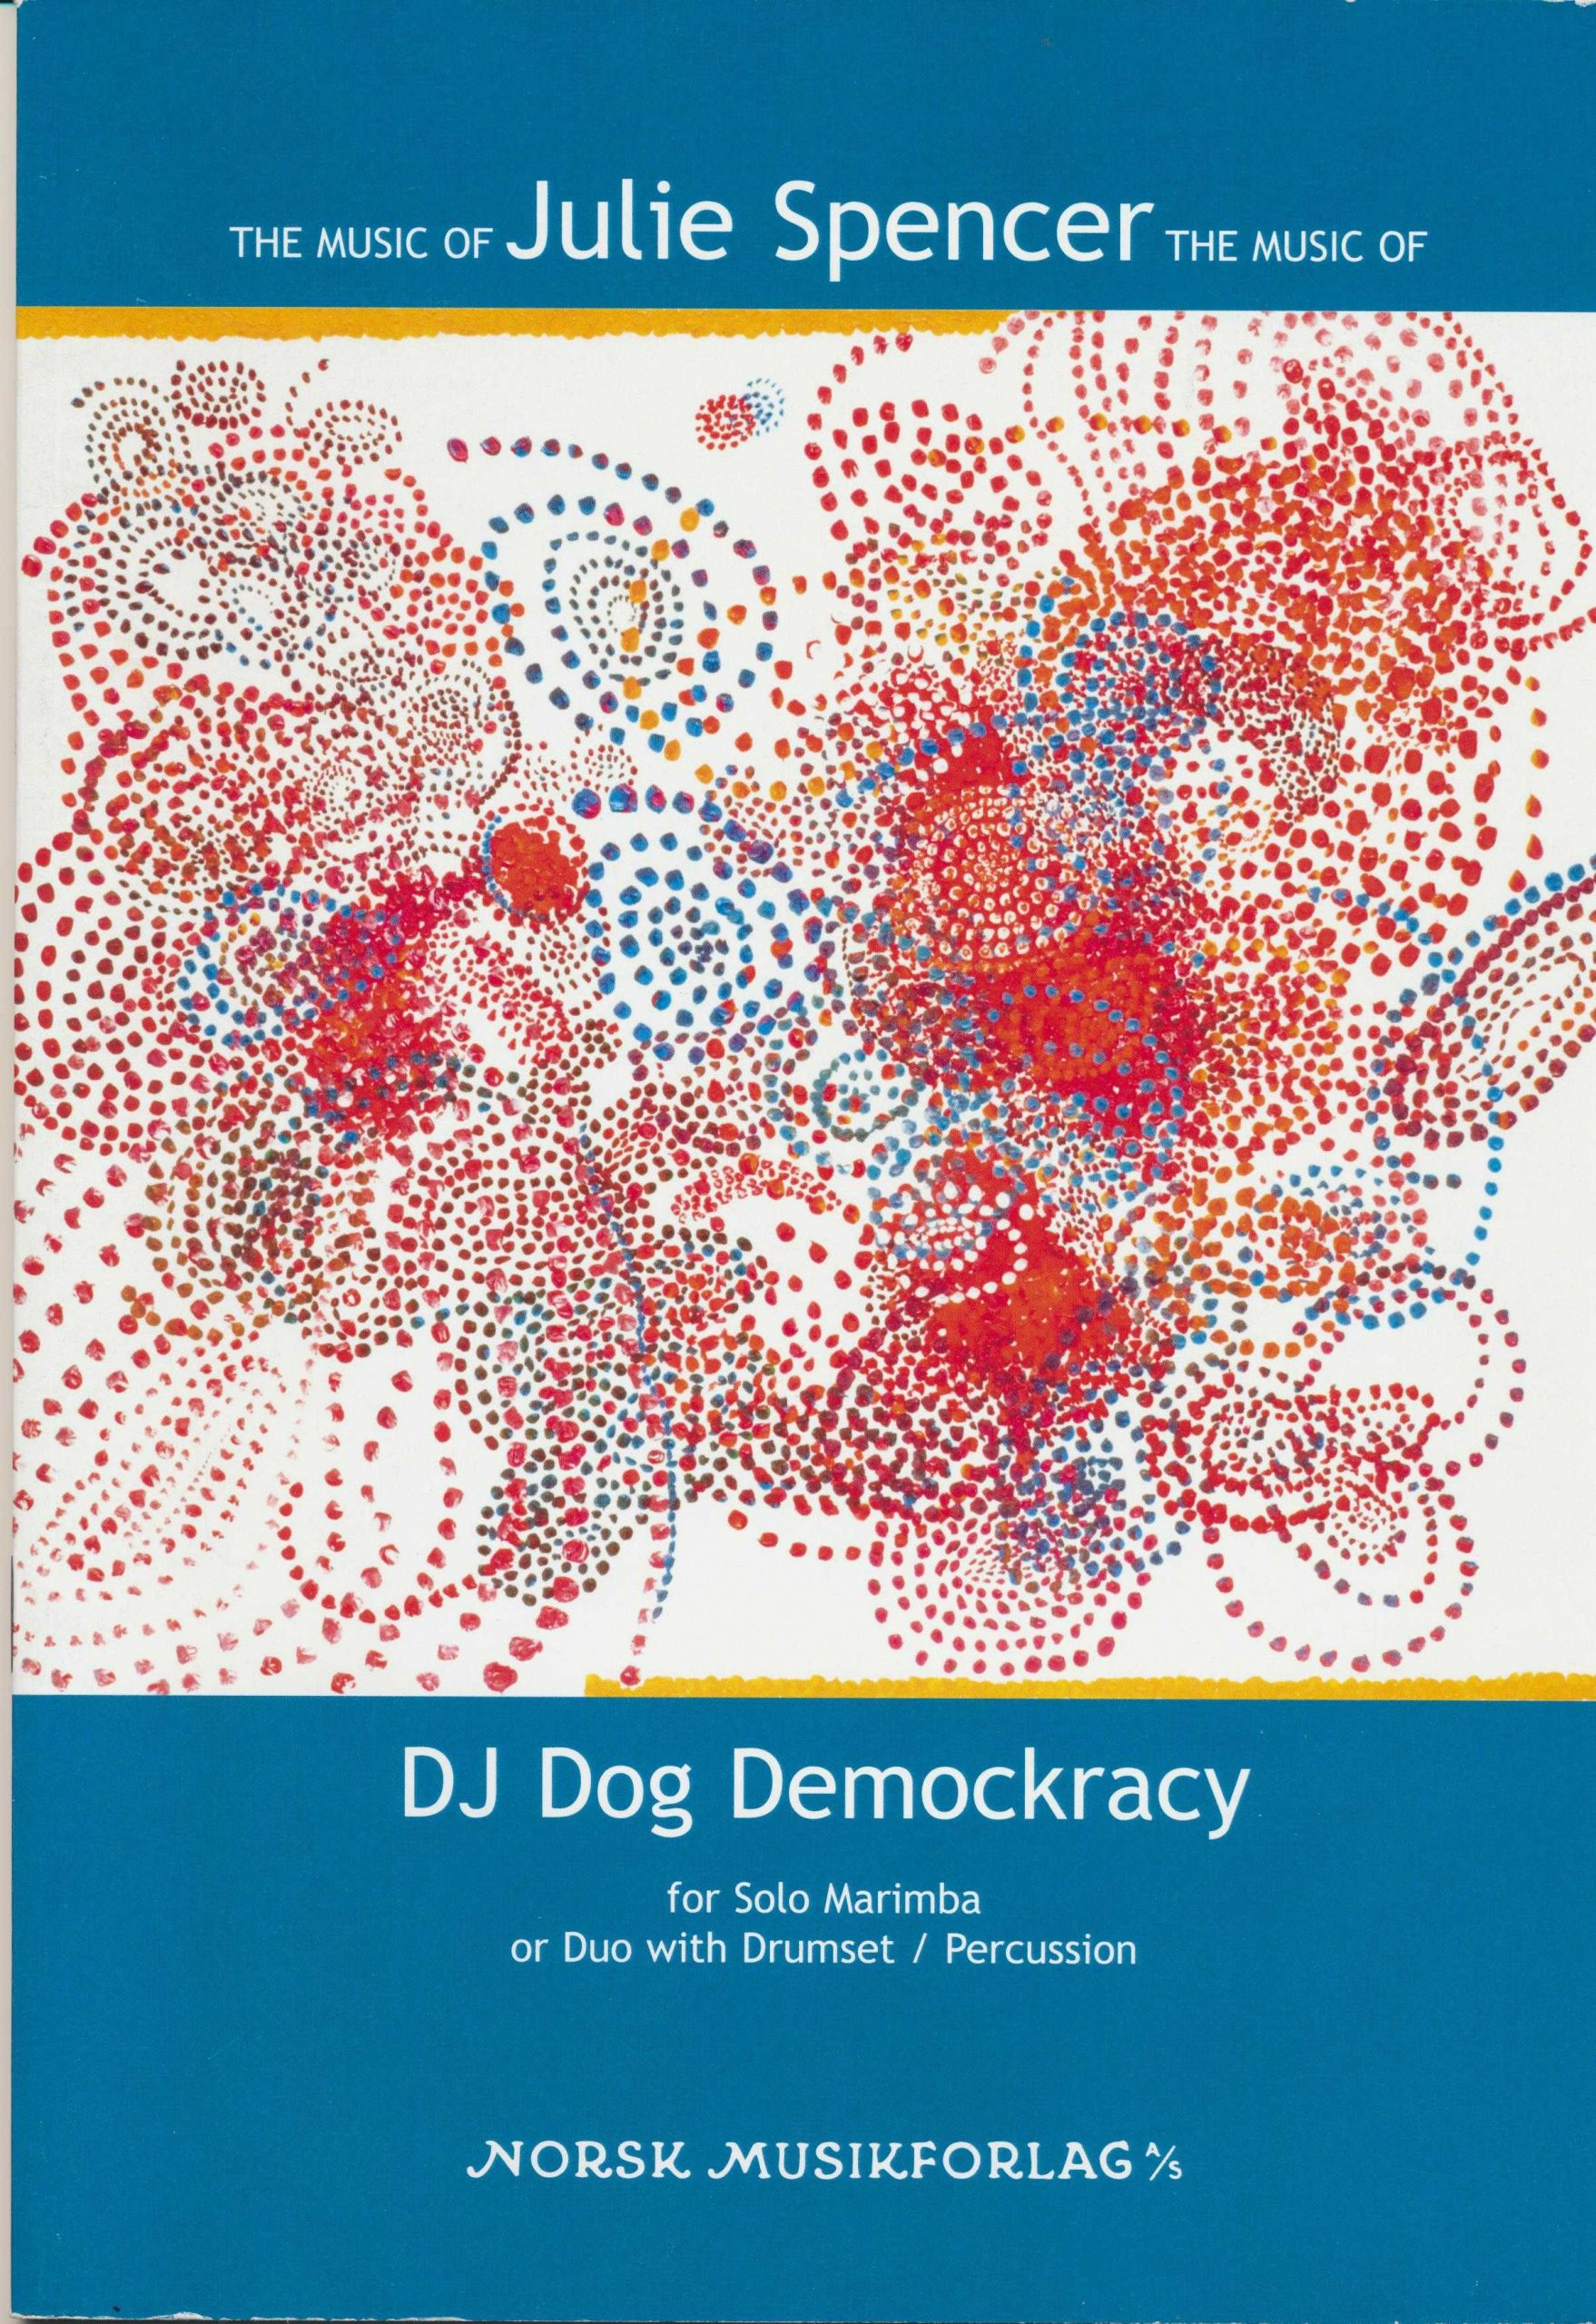 DJ Dog Demockracy for Solo Marimba by Julie Spencer